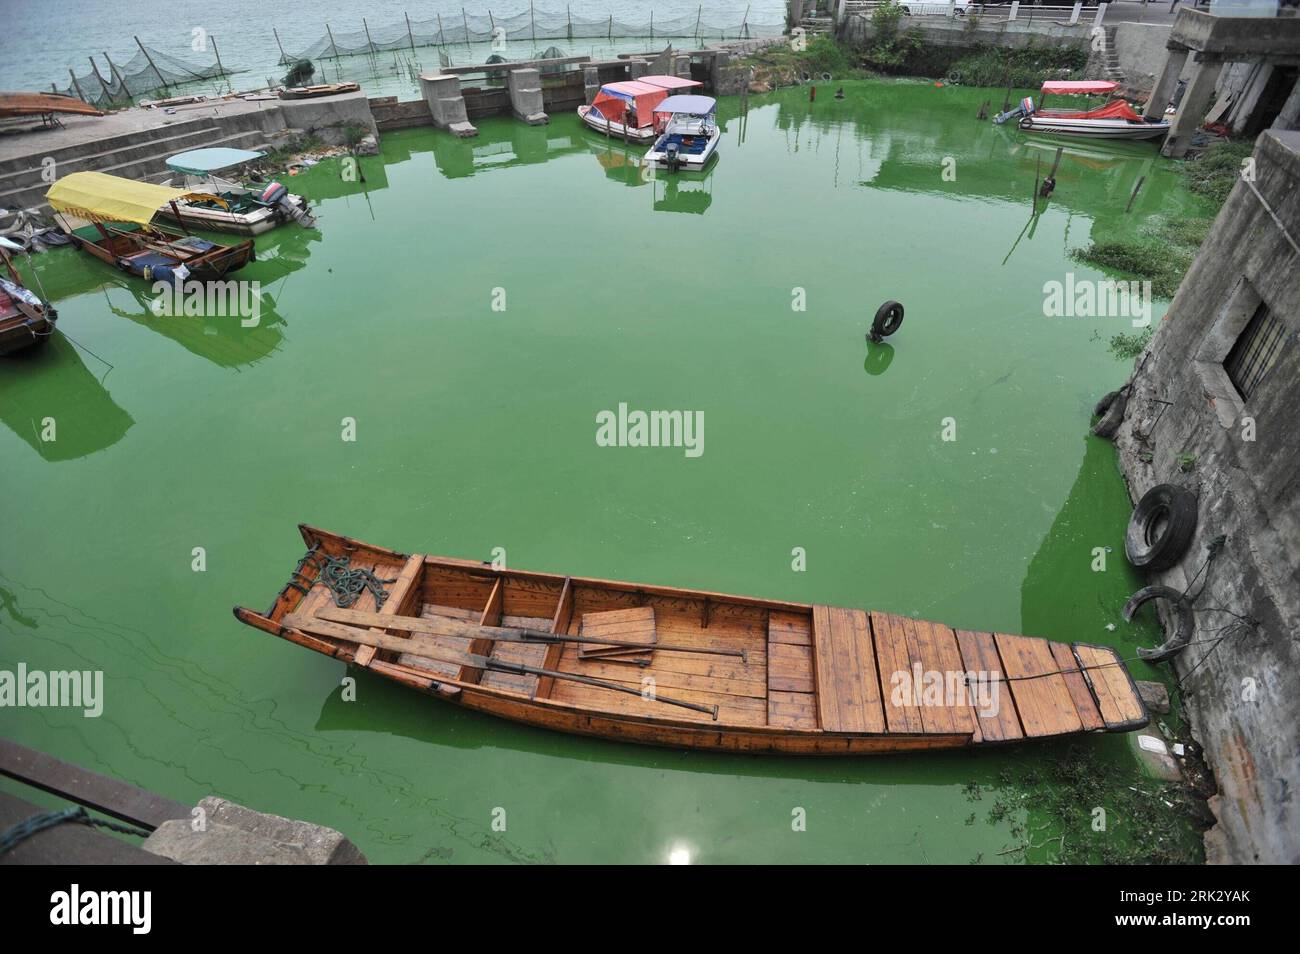 Bildnummer: 53268086  Datum: 17.08.2009  Copyright: imago/Xinhua (090817) -- WUHAN, Aug. 17, 2009 (Xinhua) -- The picture taken on Aug. 17, 2009 shows a lake polluted by cyanophyta algal in Wuhan, capital city of central China s Hubei Province. Local environment authority is monitoring the lake water to prevent the spread of pollution. (Xinhua) (xxh) (1)CHINA-WUHAN-POLLUTION (CN)  PUBLICATIONxNOTxINxCHN  Fotostory blaugrüne Algen Alge Algenblüte Verschmutzung Wasserverschmutzung Gewässer premiumd Highlight kbdig xsk  2009 quer o0 Wasser    Bildnummer 53268086 Date 17 08 2009 Copyright Imago XI Stock Photo